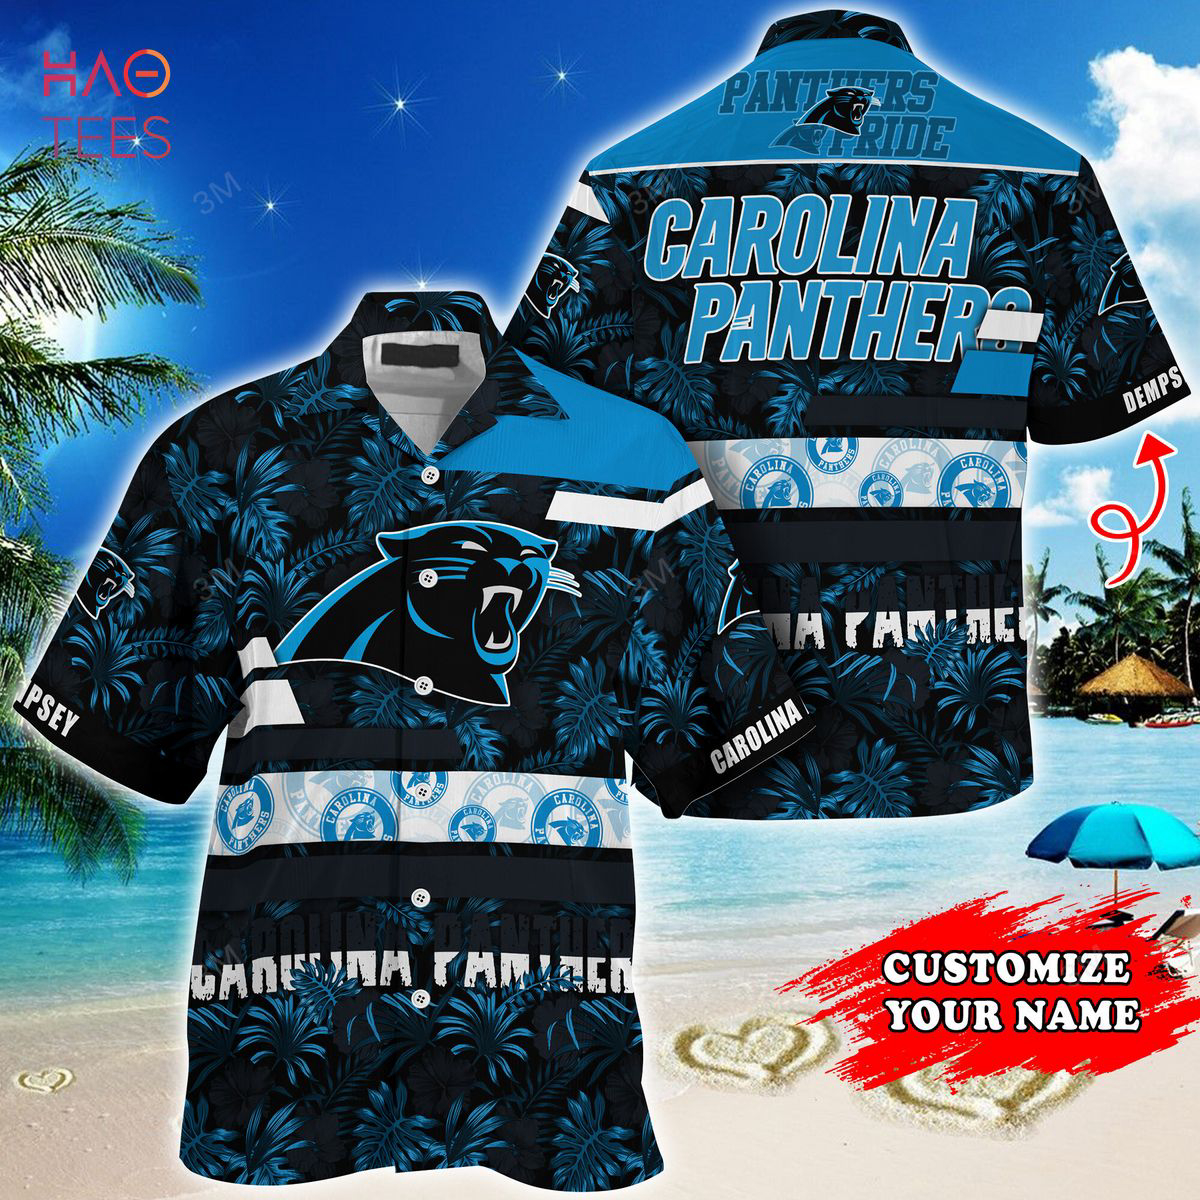 Chicago Cubs MLB-Personalized Hawaiian Shirt Hot Summer 2023 Travel Gift